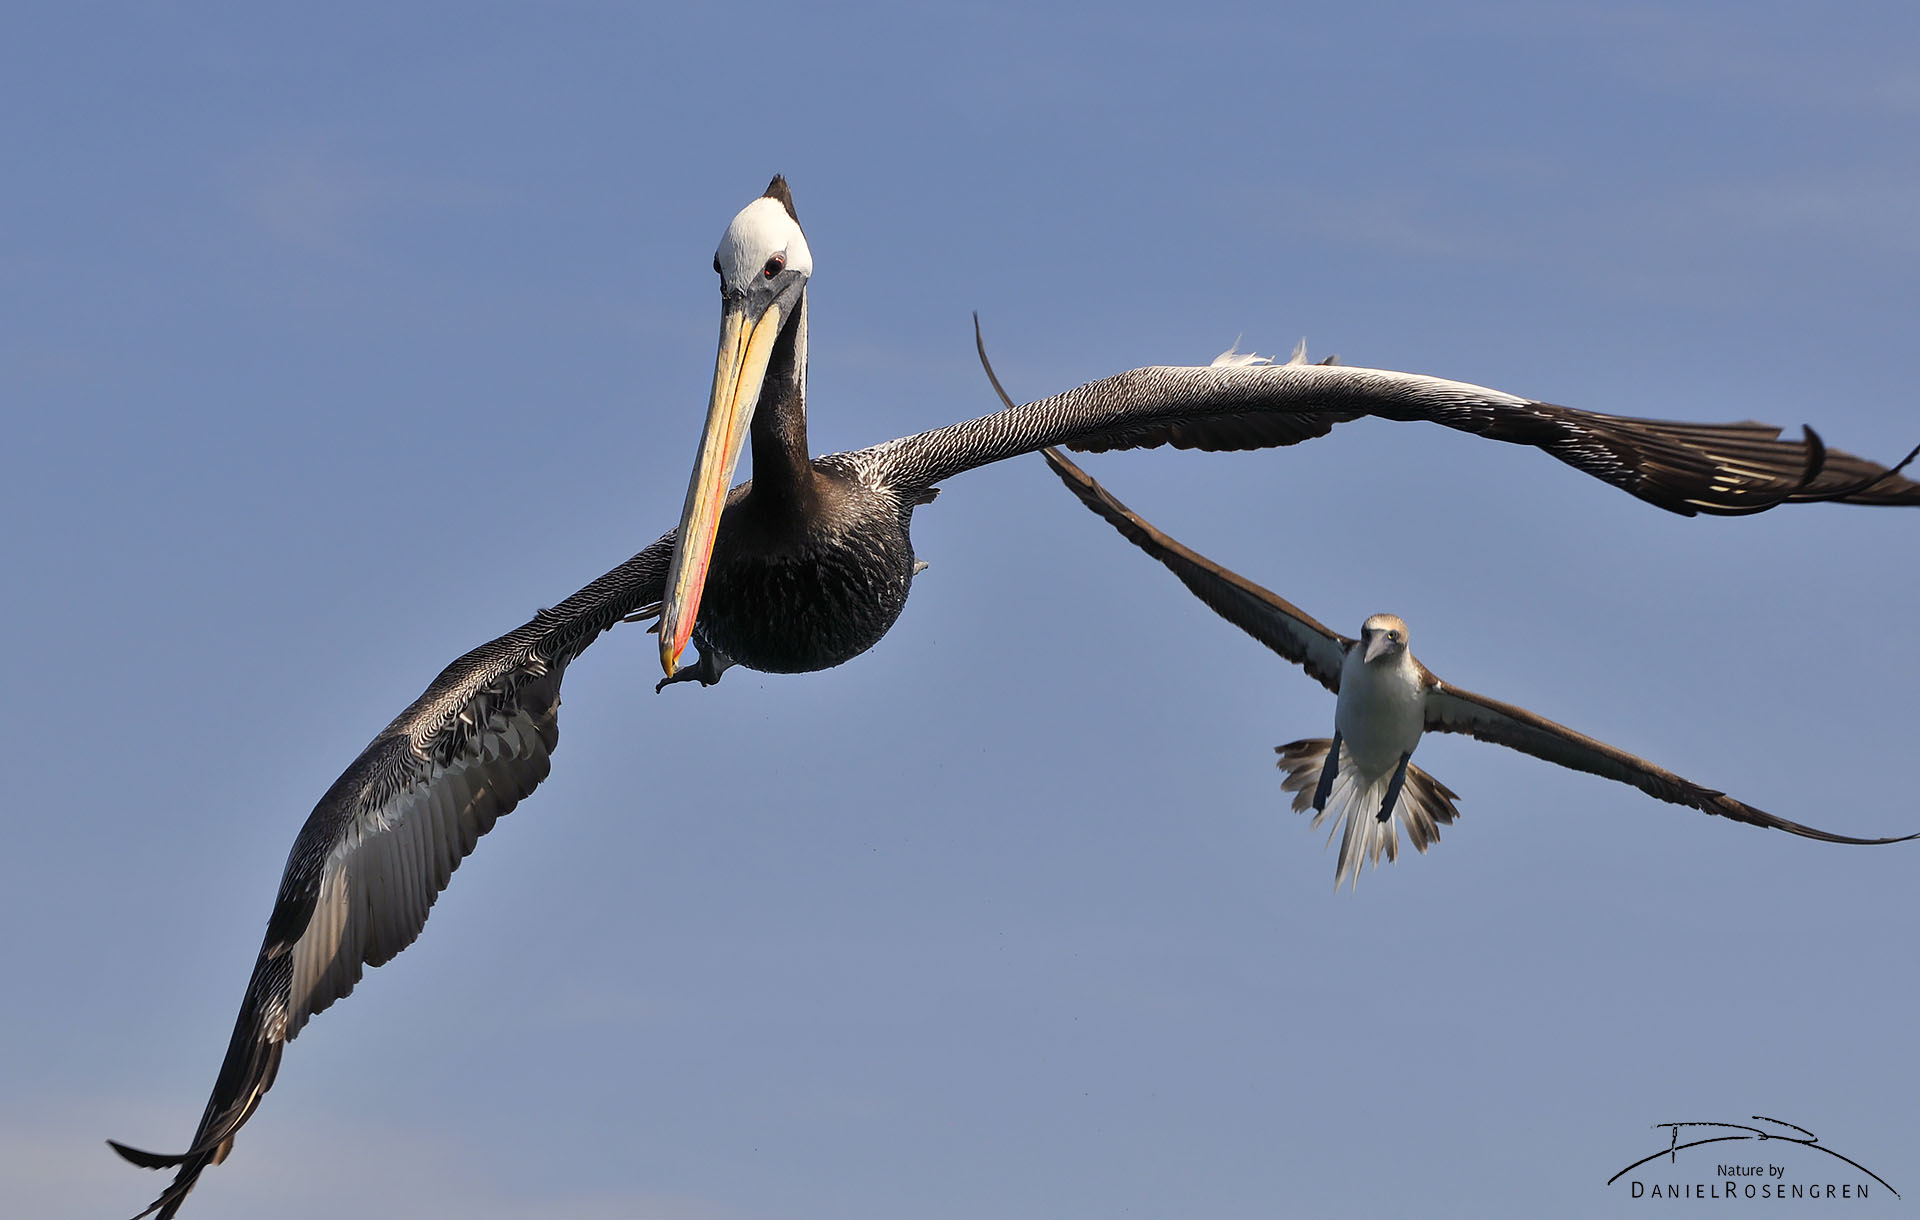 A Peruvian pelican arriving at the feeding frenzy. © Daniel Rosengren